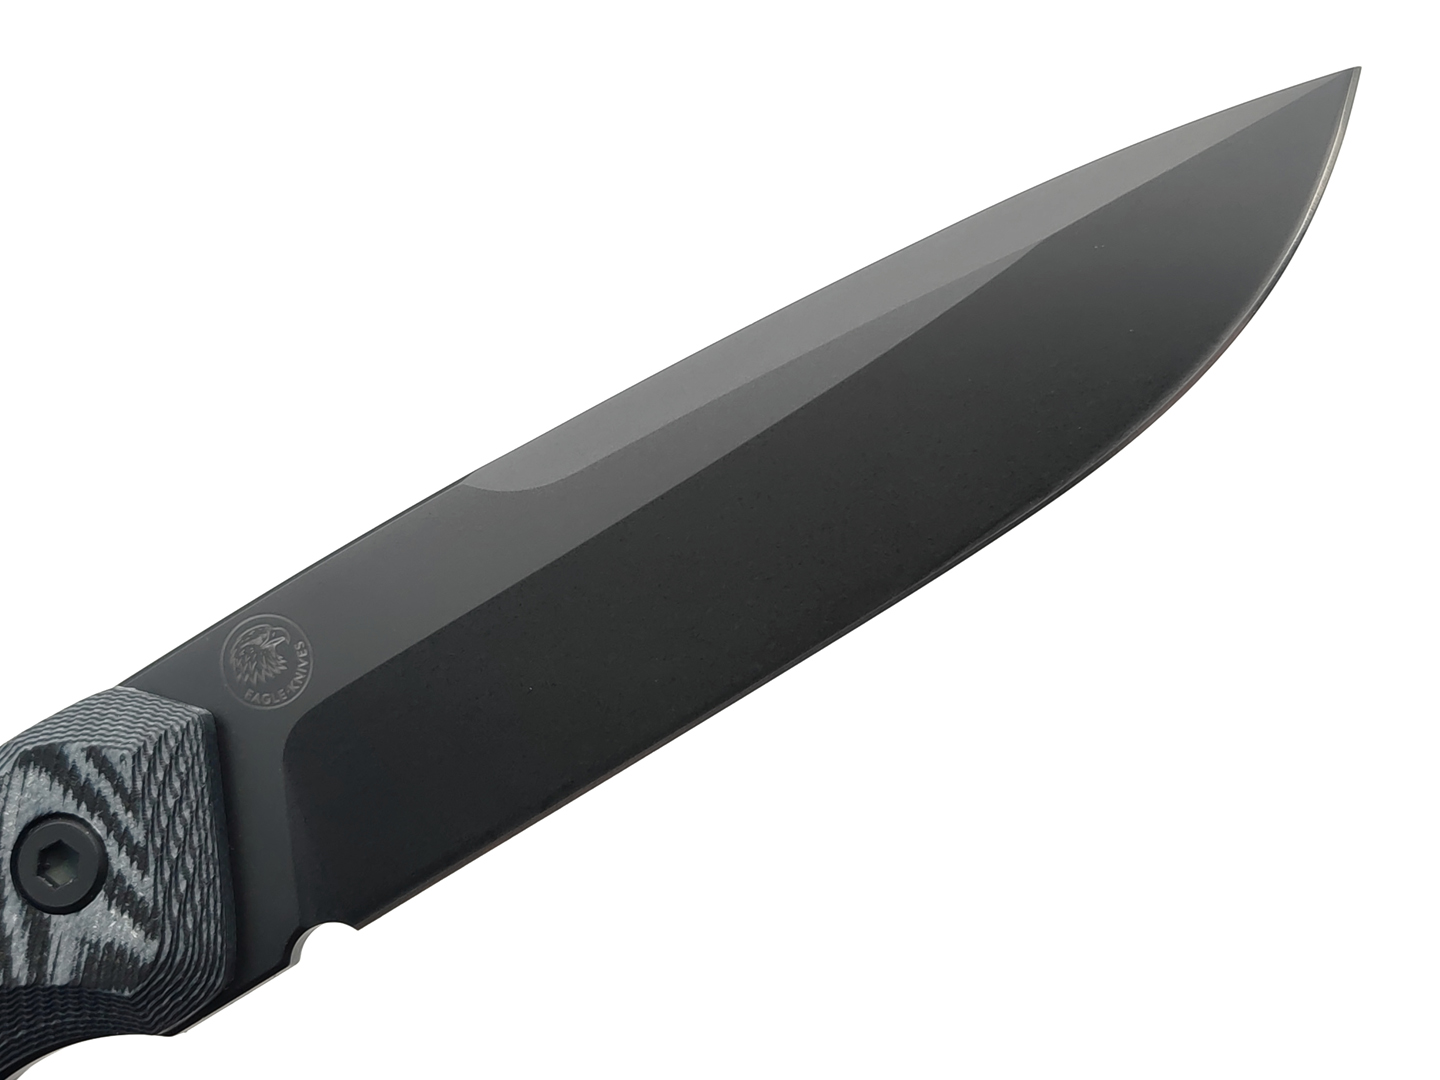 Eagle Knives нож Attacker 1 сталь Aus10Co black, рукоять G10 black & grey, ножны Kydex